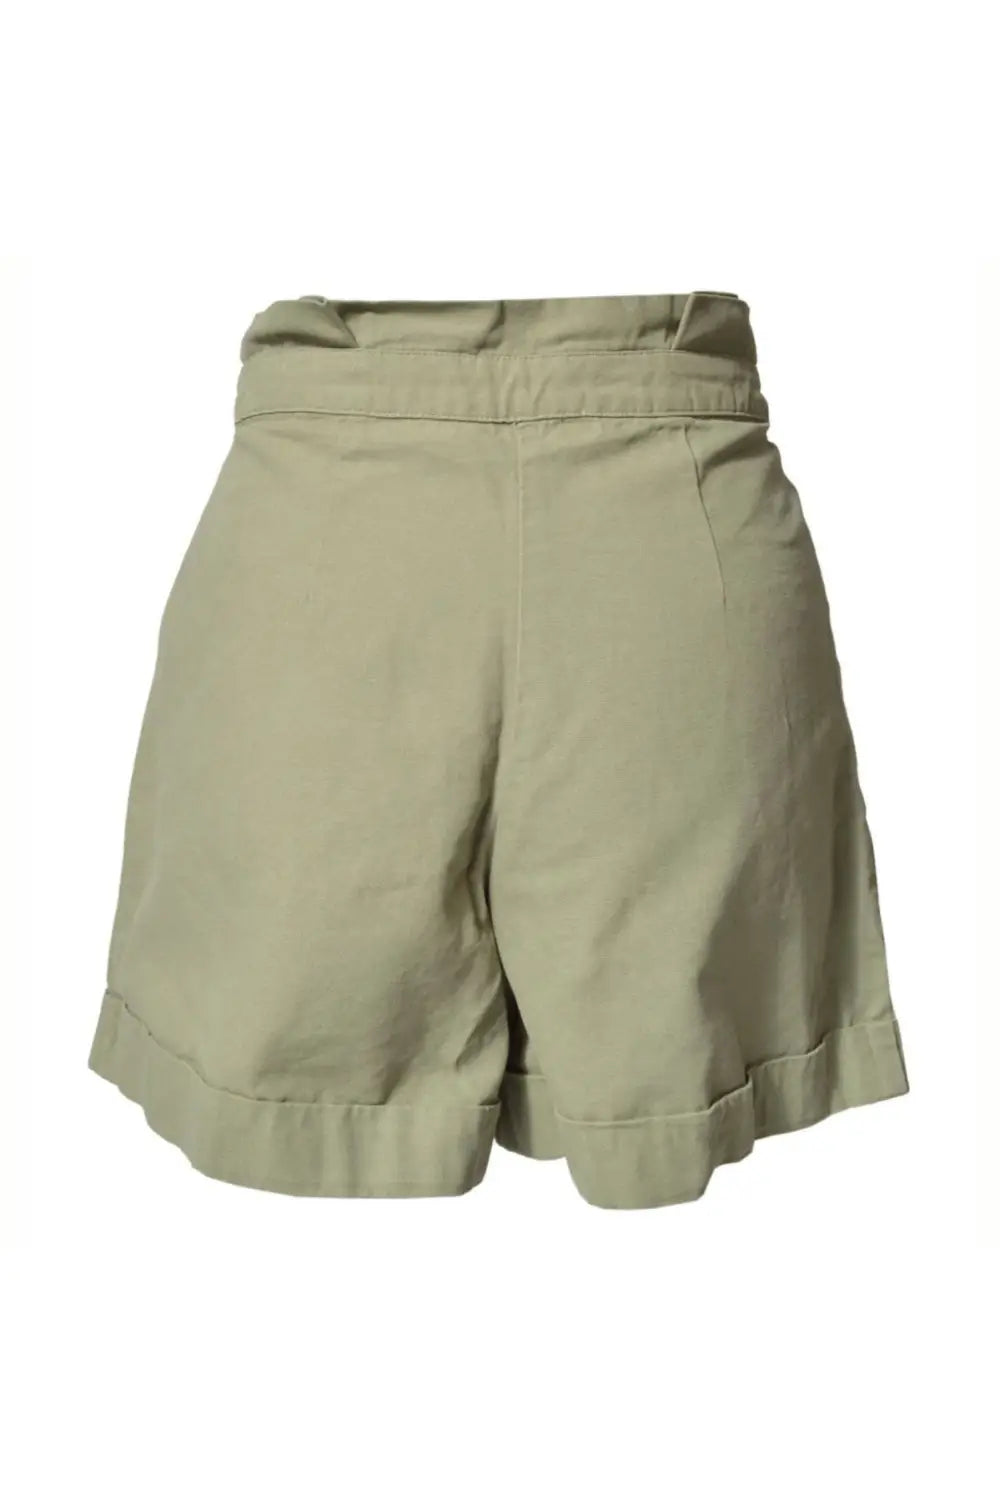 Oasis Paperbag Shorts